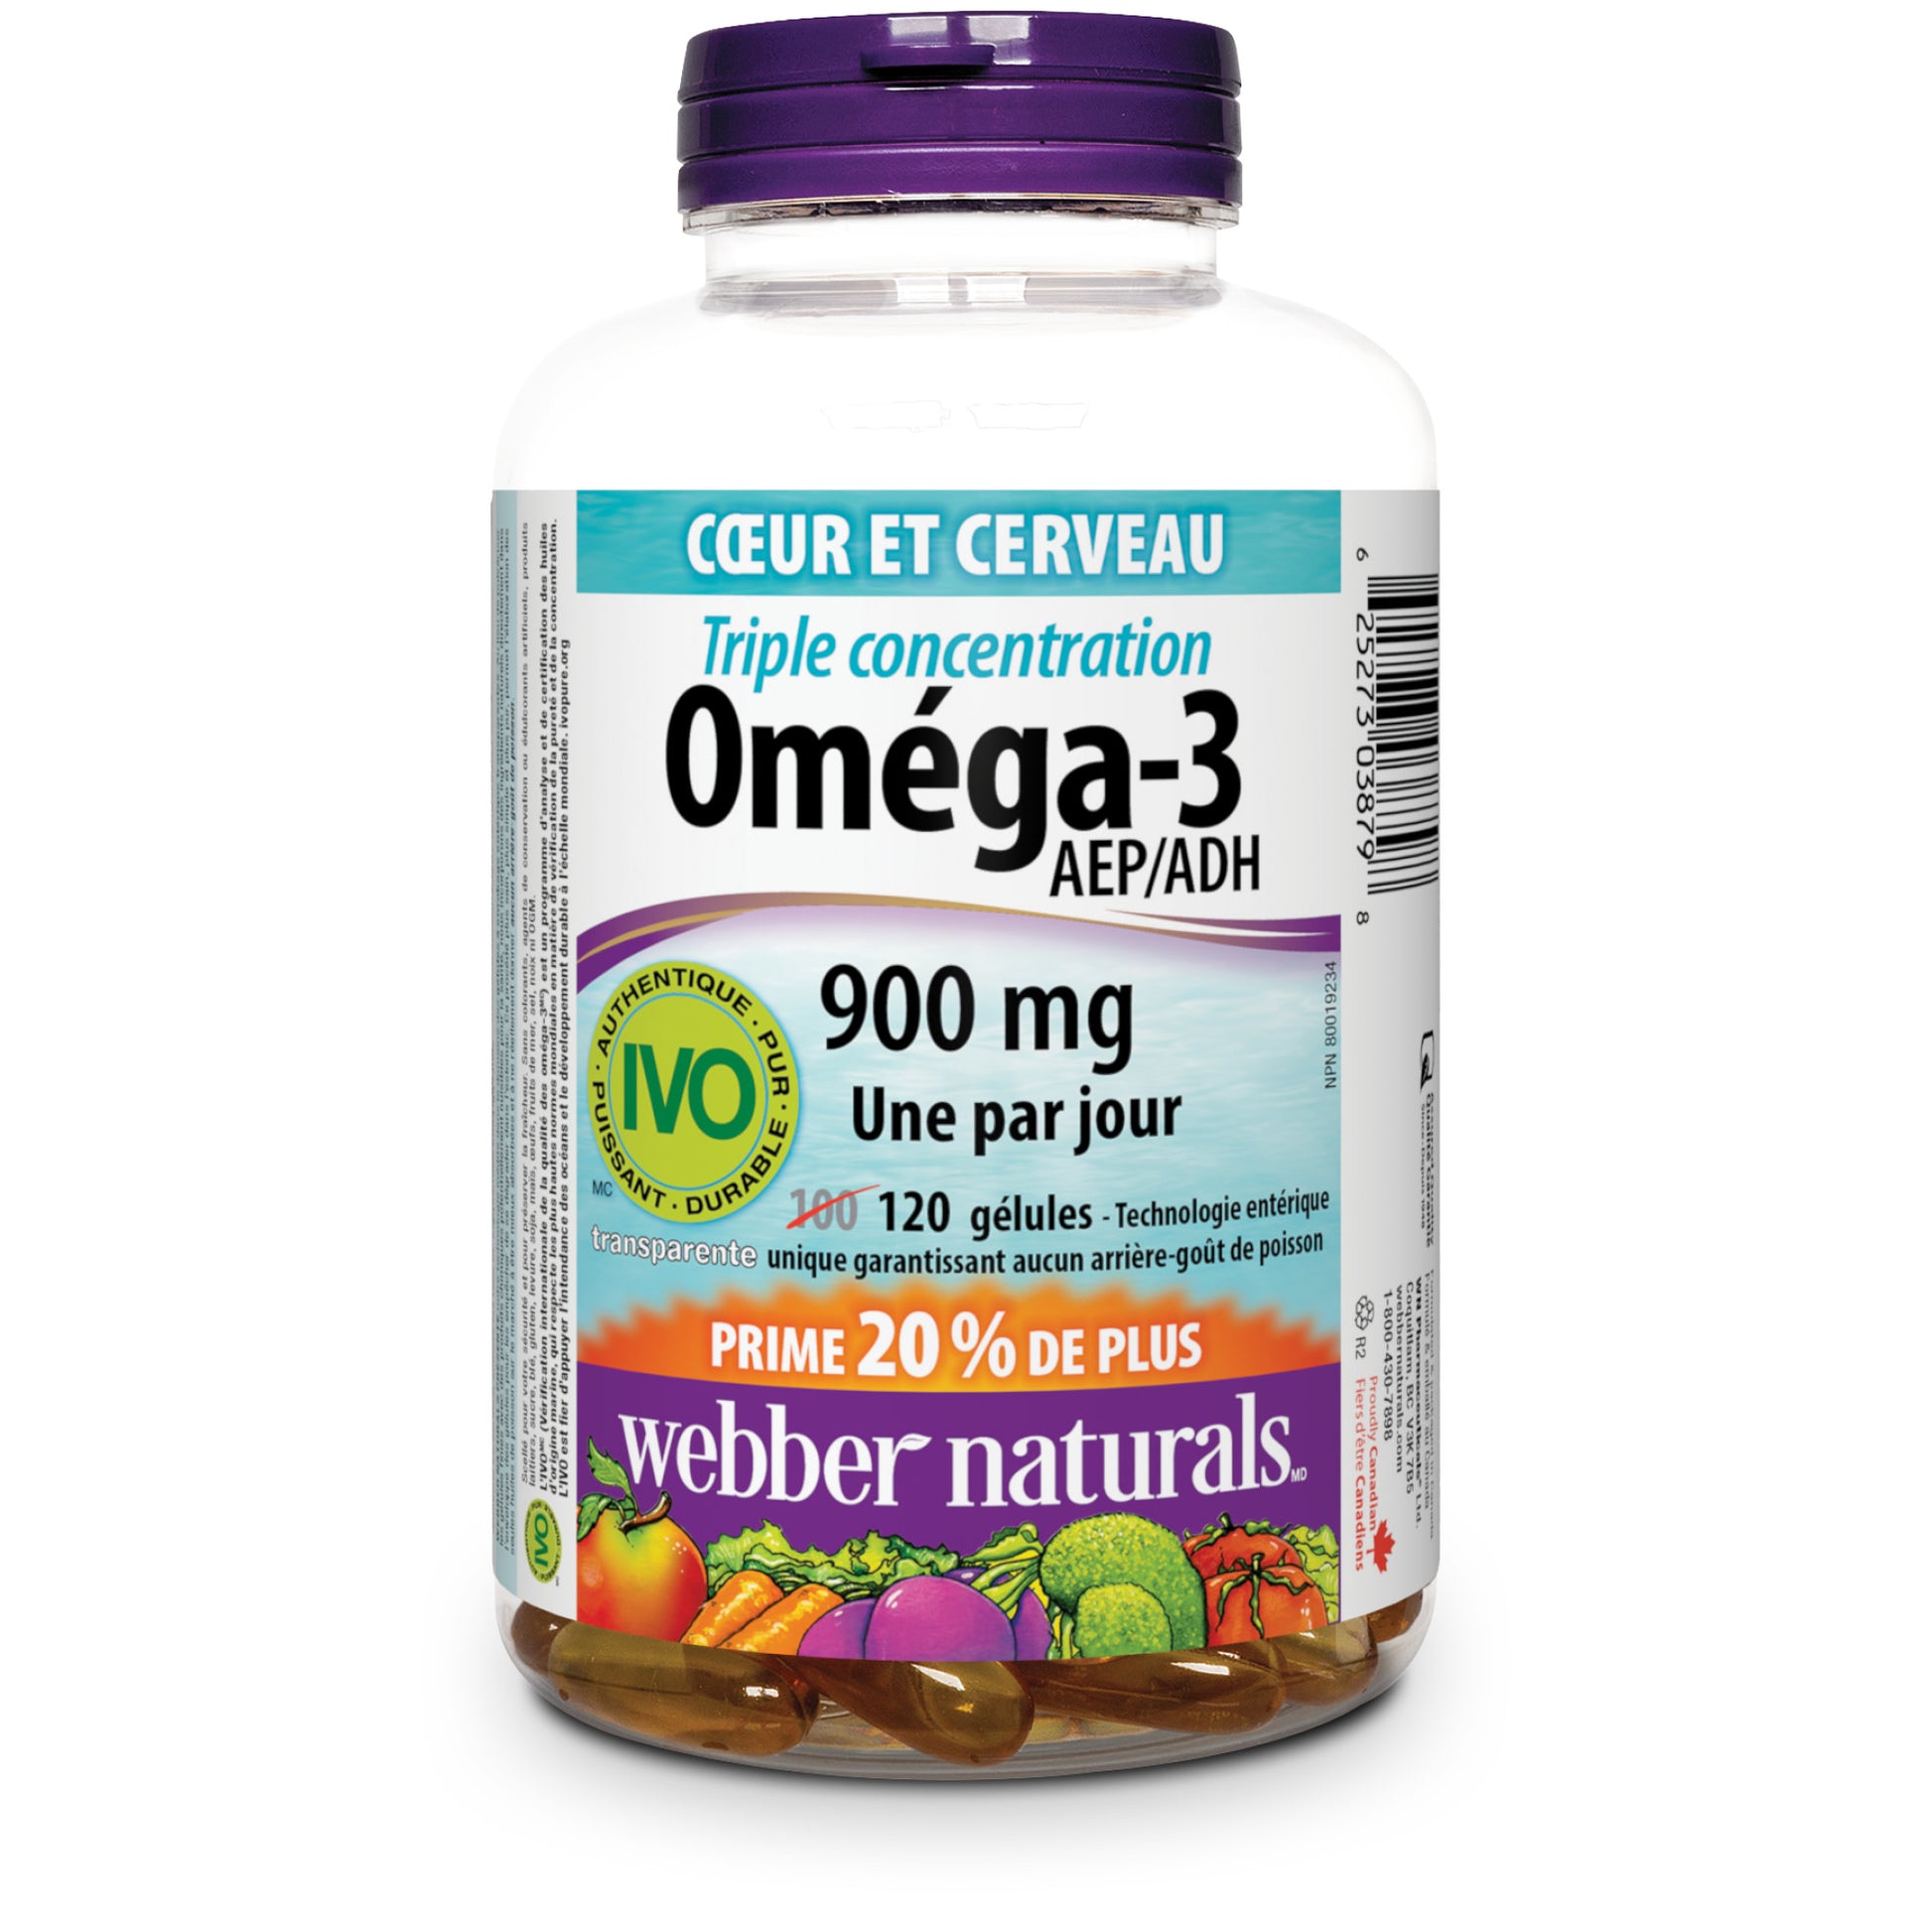 Triple Strength Omega-3 900 mg EPA/DHA for Webber Naturals|v|hi-res|WN3879